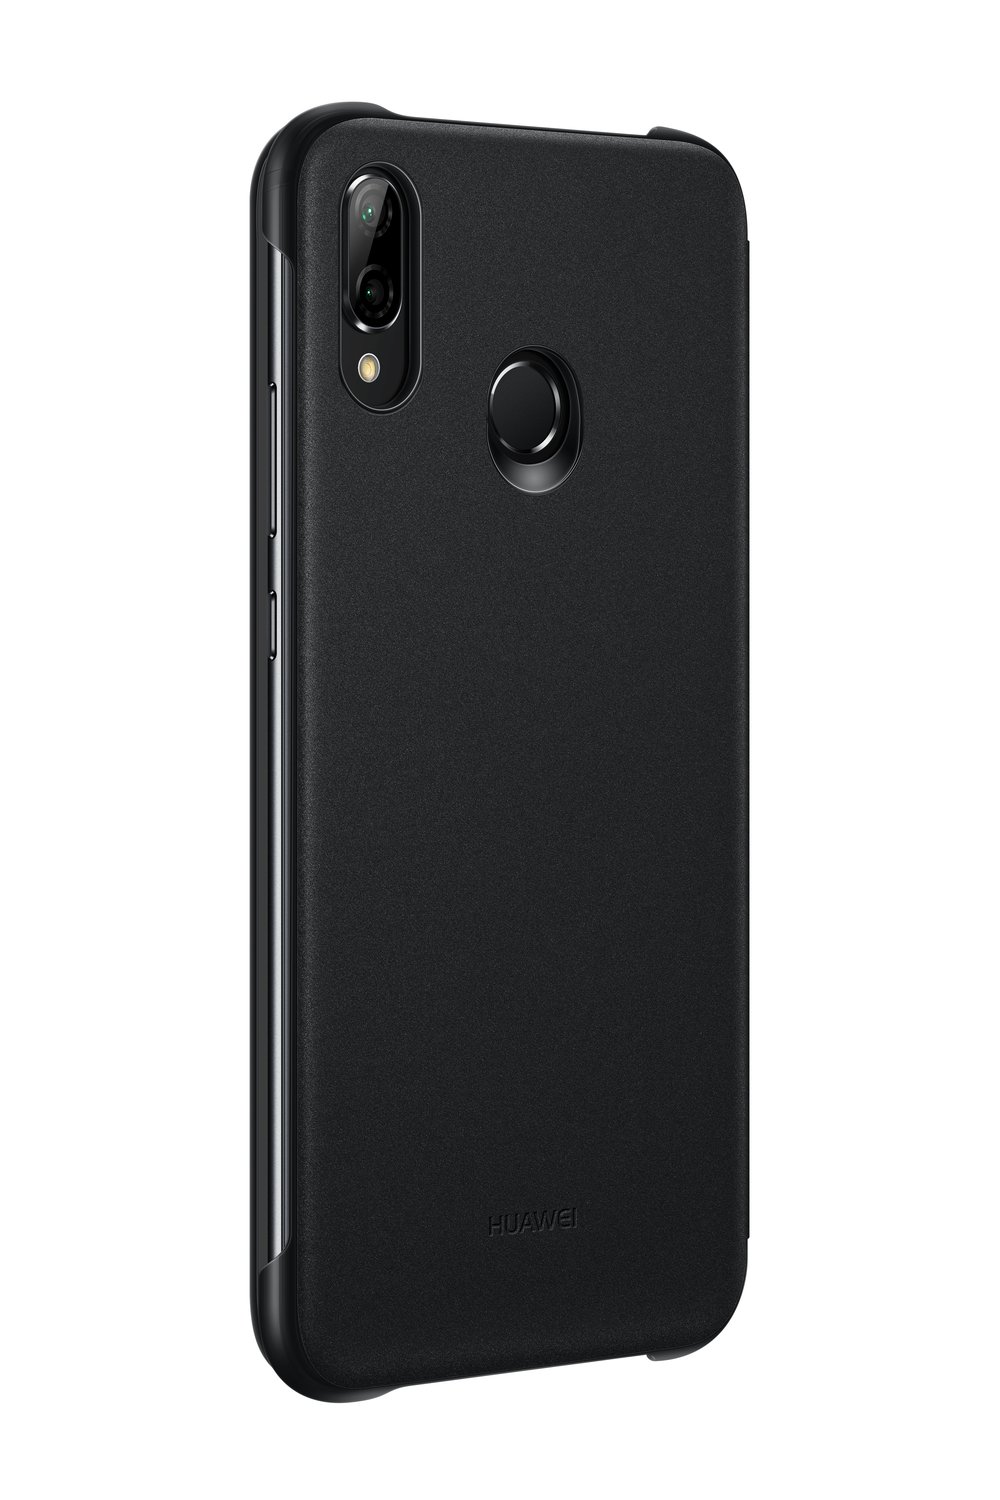 Чехол хуавей 20 лайт. Huawei p20 Lite чехол. Huawei p20 Lite Black Case. Черный чехол для Huawei p20 Lite обычный. Чехол Huawei p20 Amazon.